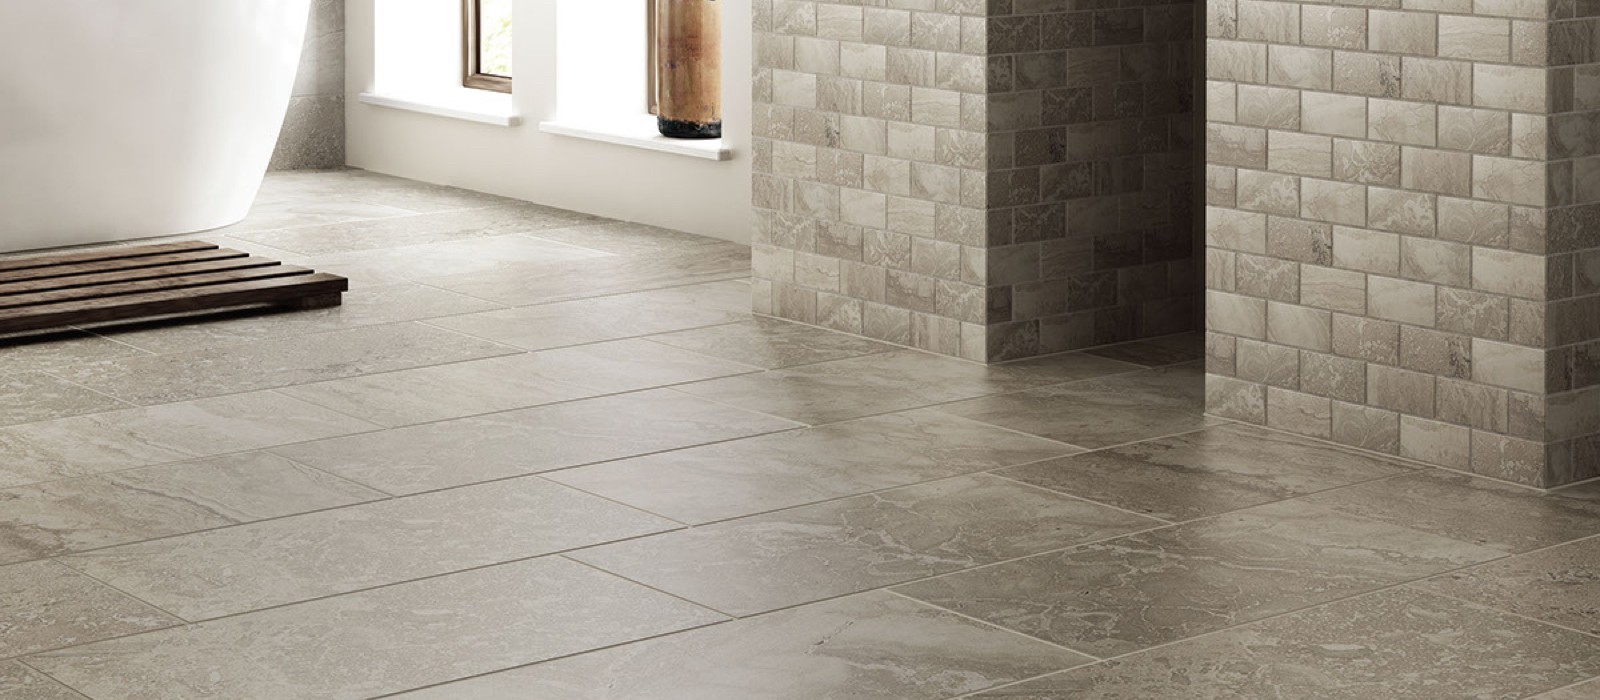 Daltile tile flooring | Flooring by Wilson's Carpet Plus